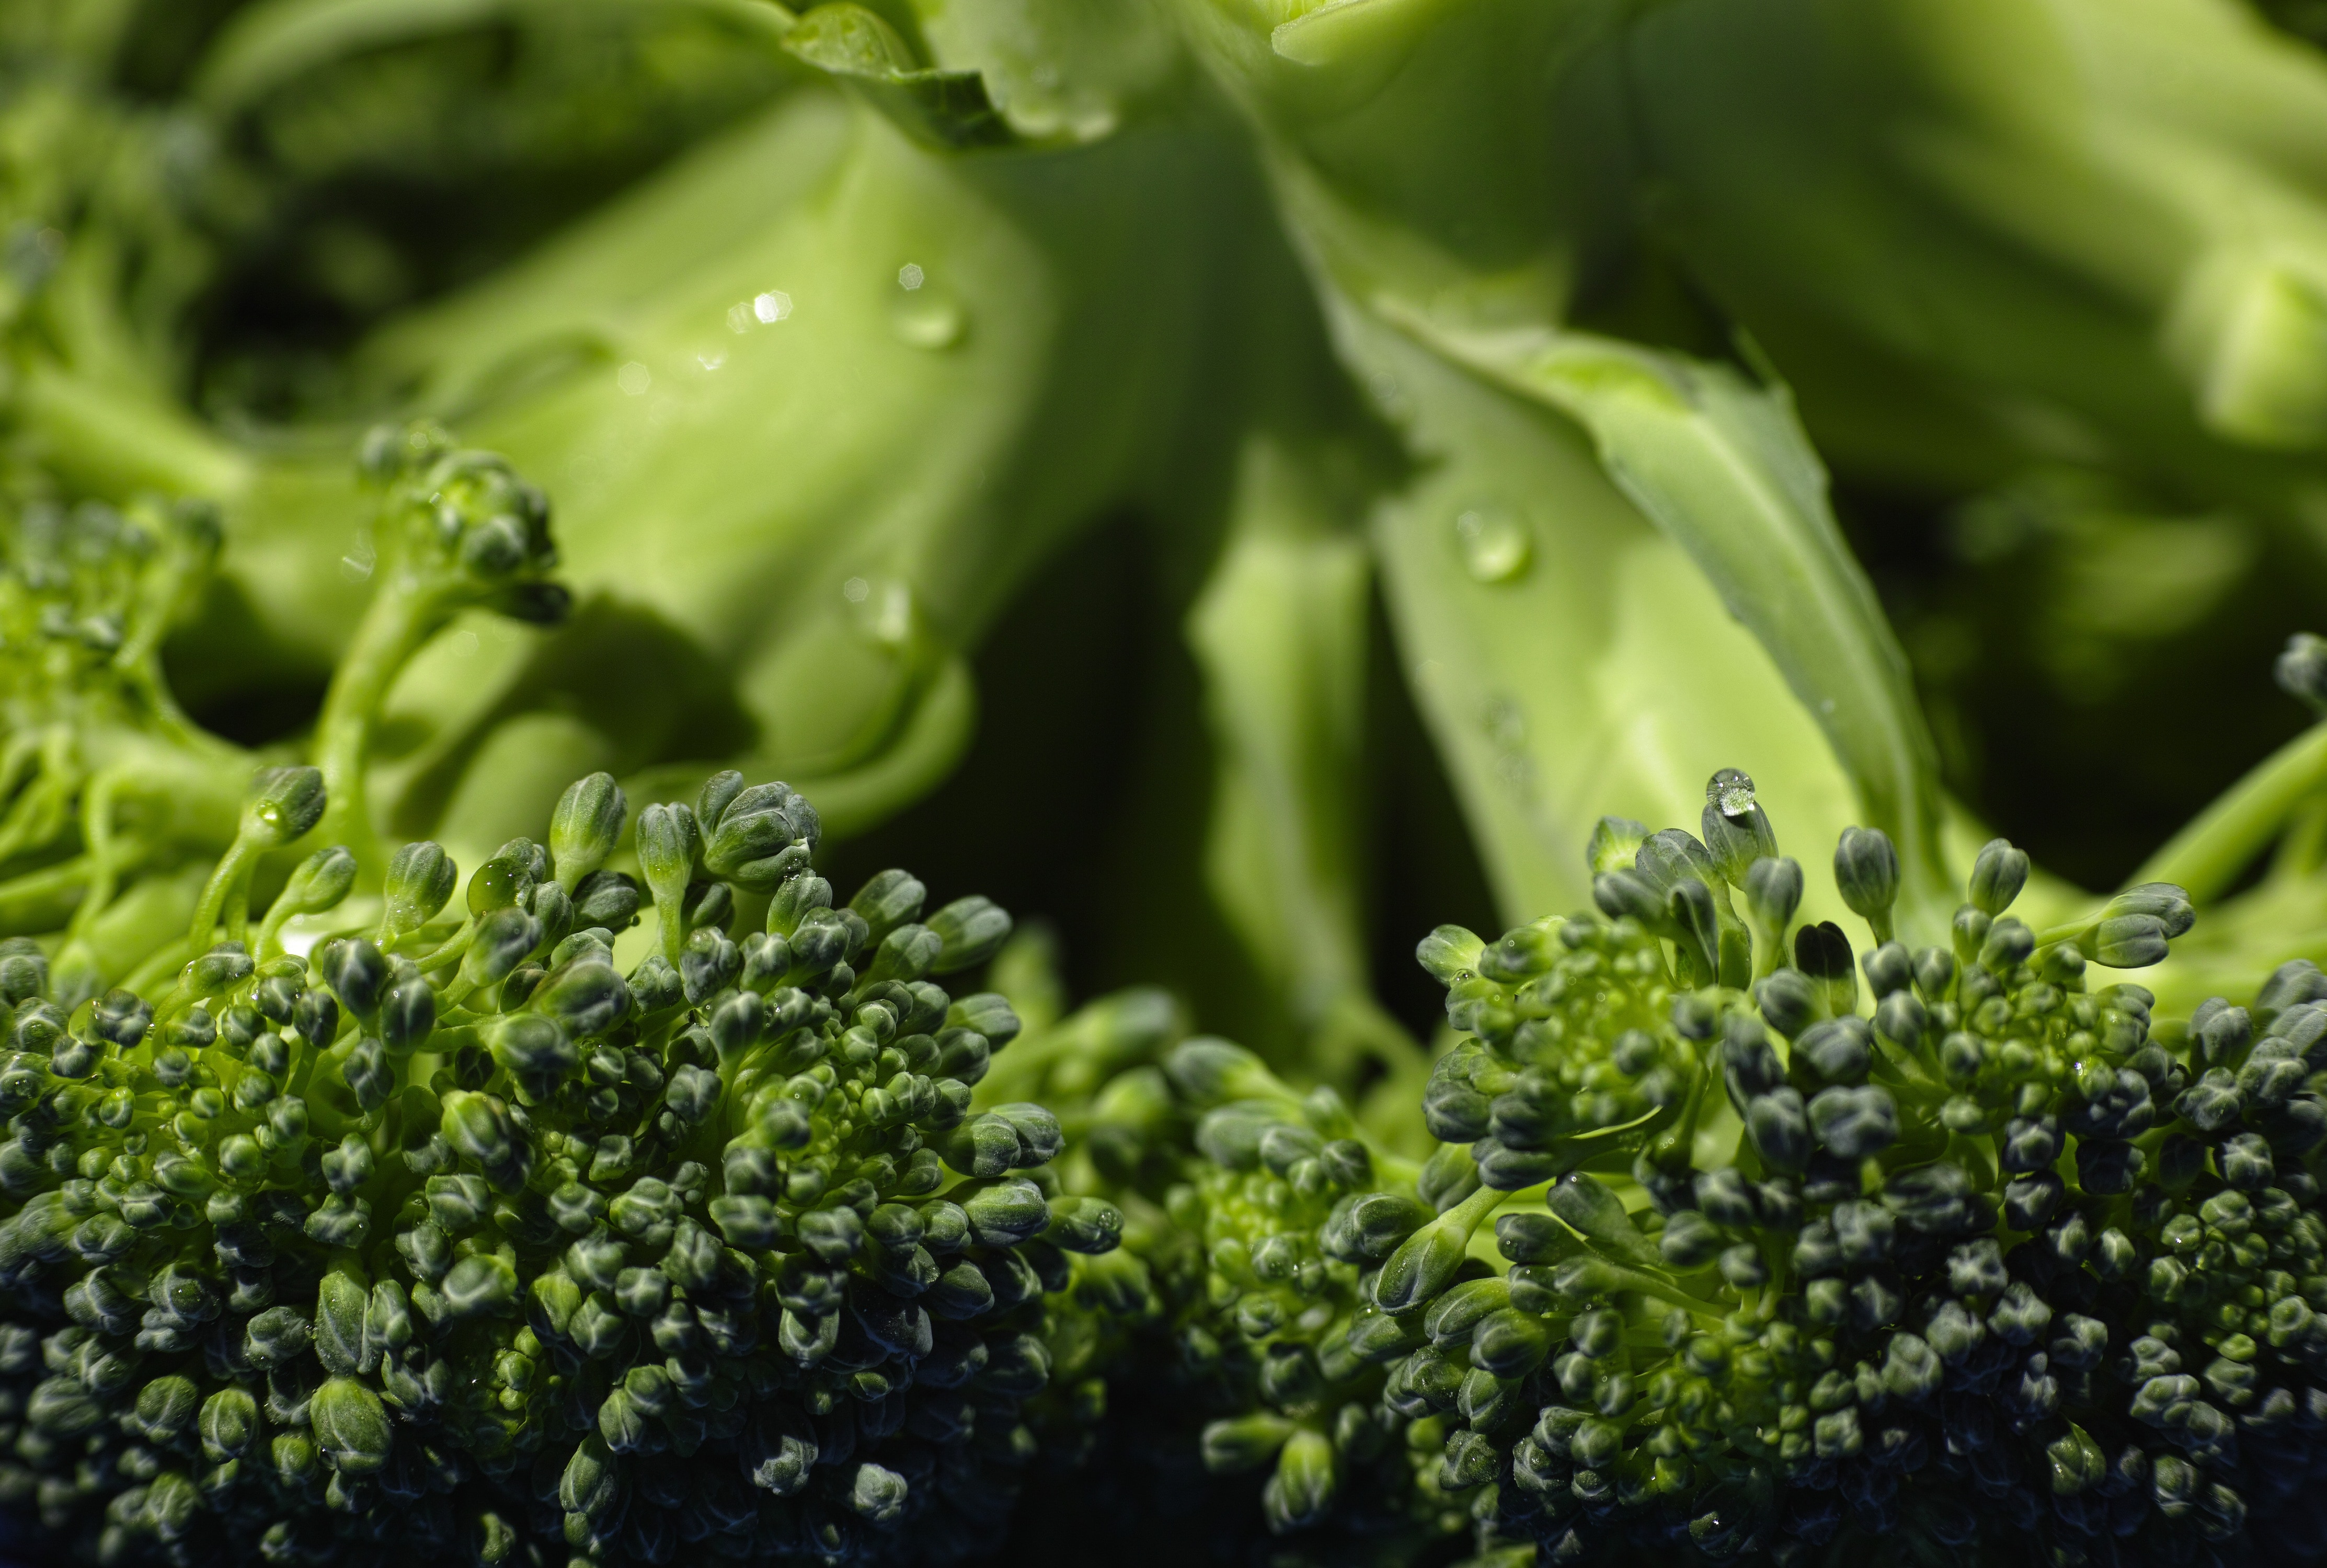 broccoli vegetable